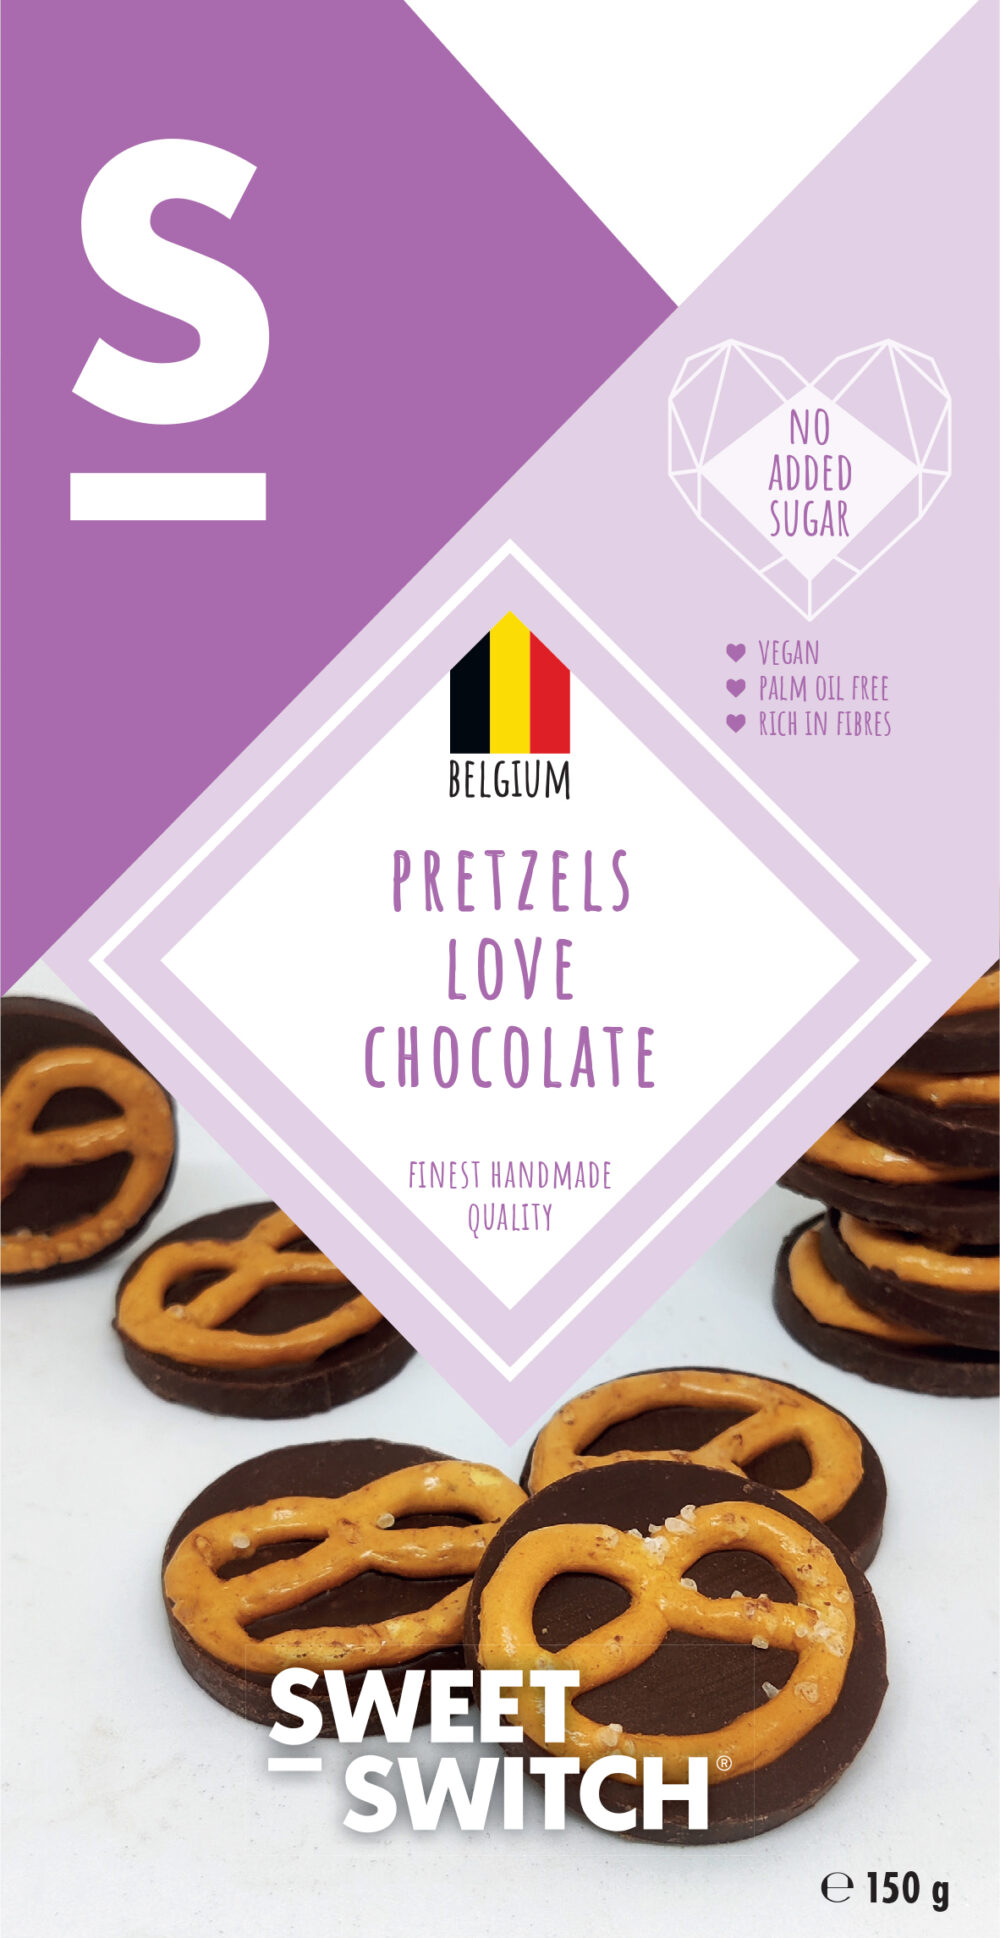 S-S 016 pretzel love.indd